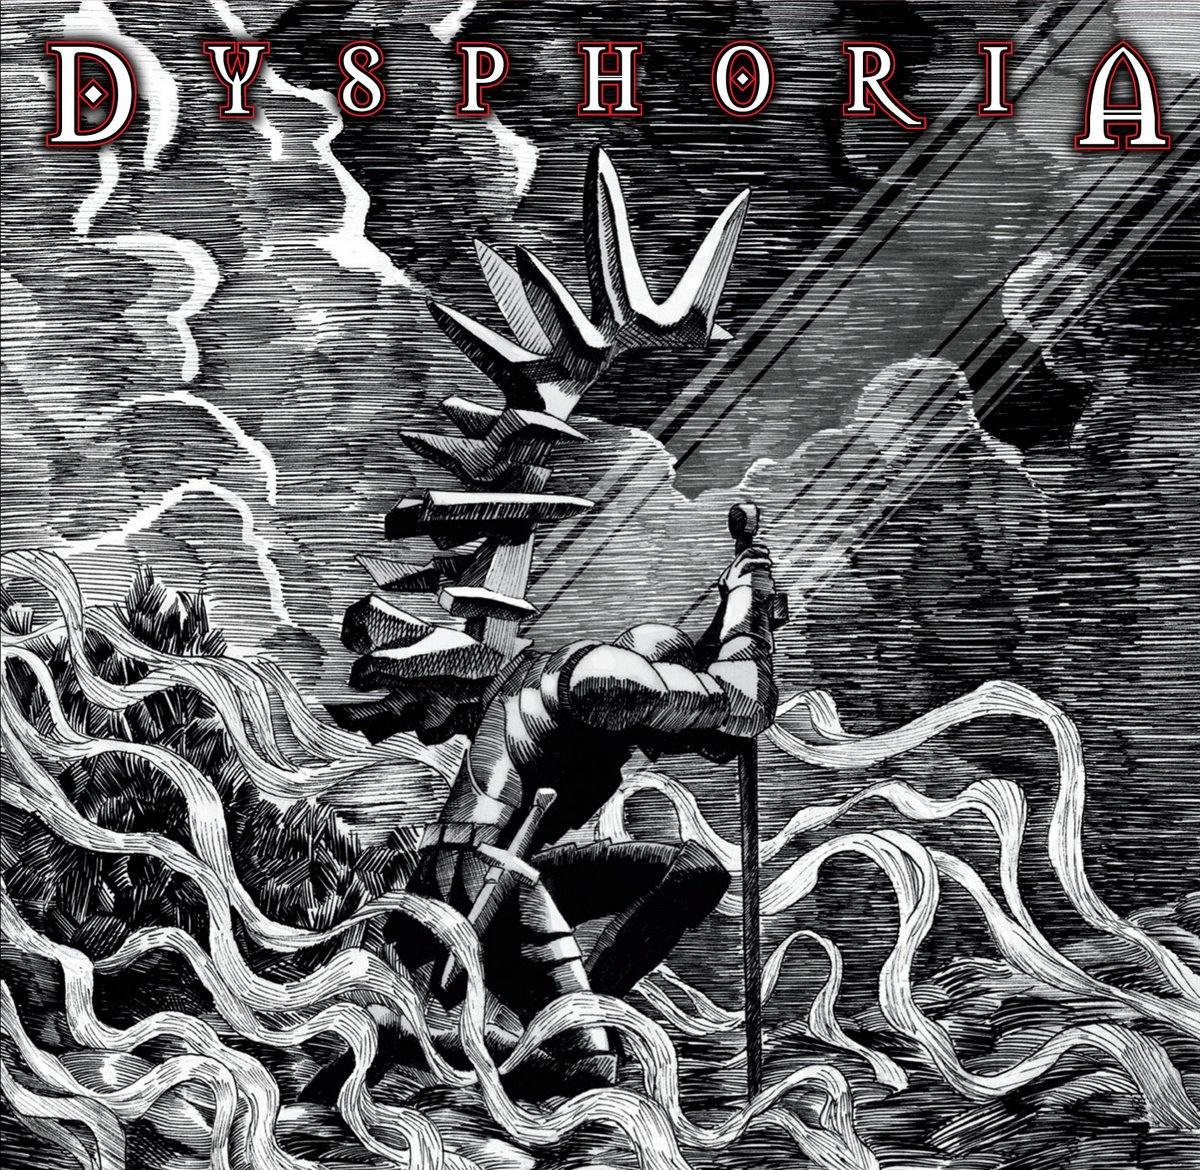 Buy – Dysphoria "2014 Demo" Digital Download – Band & Music Merch – Cold Cuts Merch